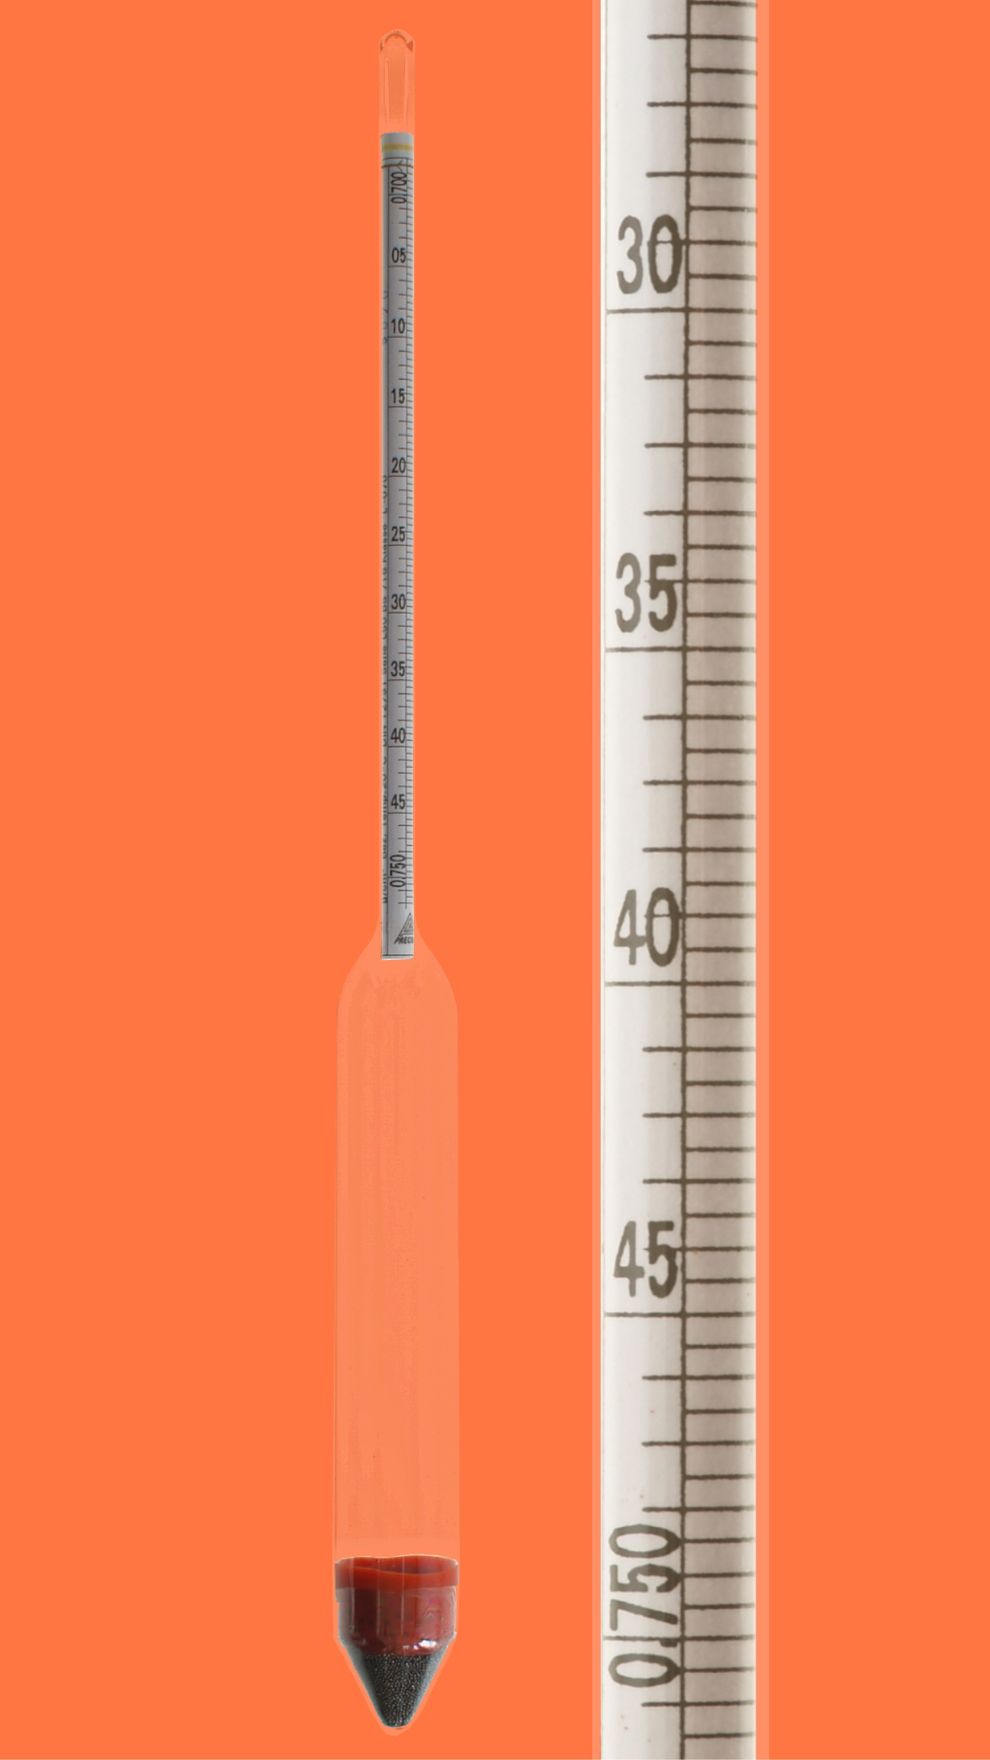 Satz Aräometer, DIN 12791, L50, 0,60-2,00, Bezugstemp. 20°C, ohne Therm